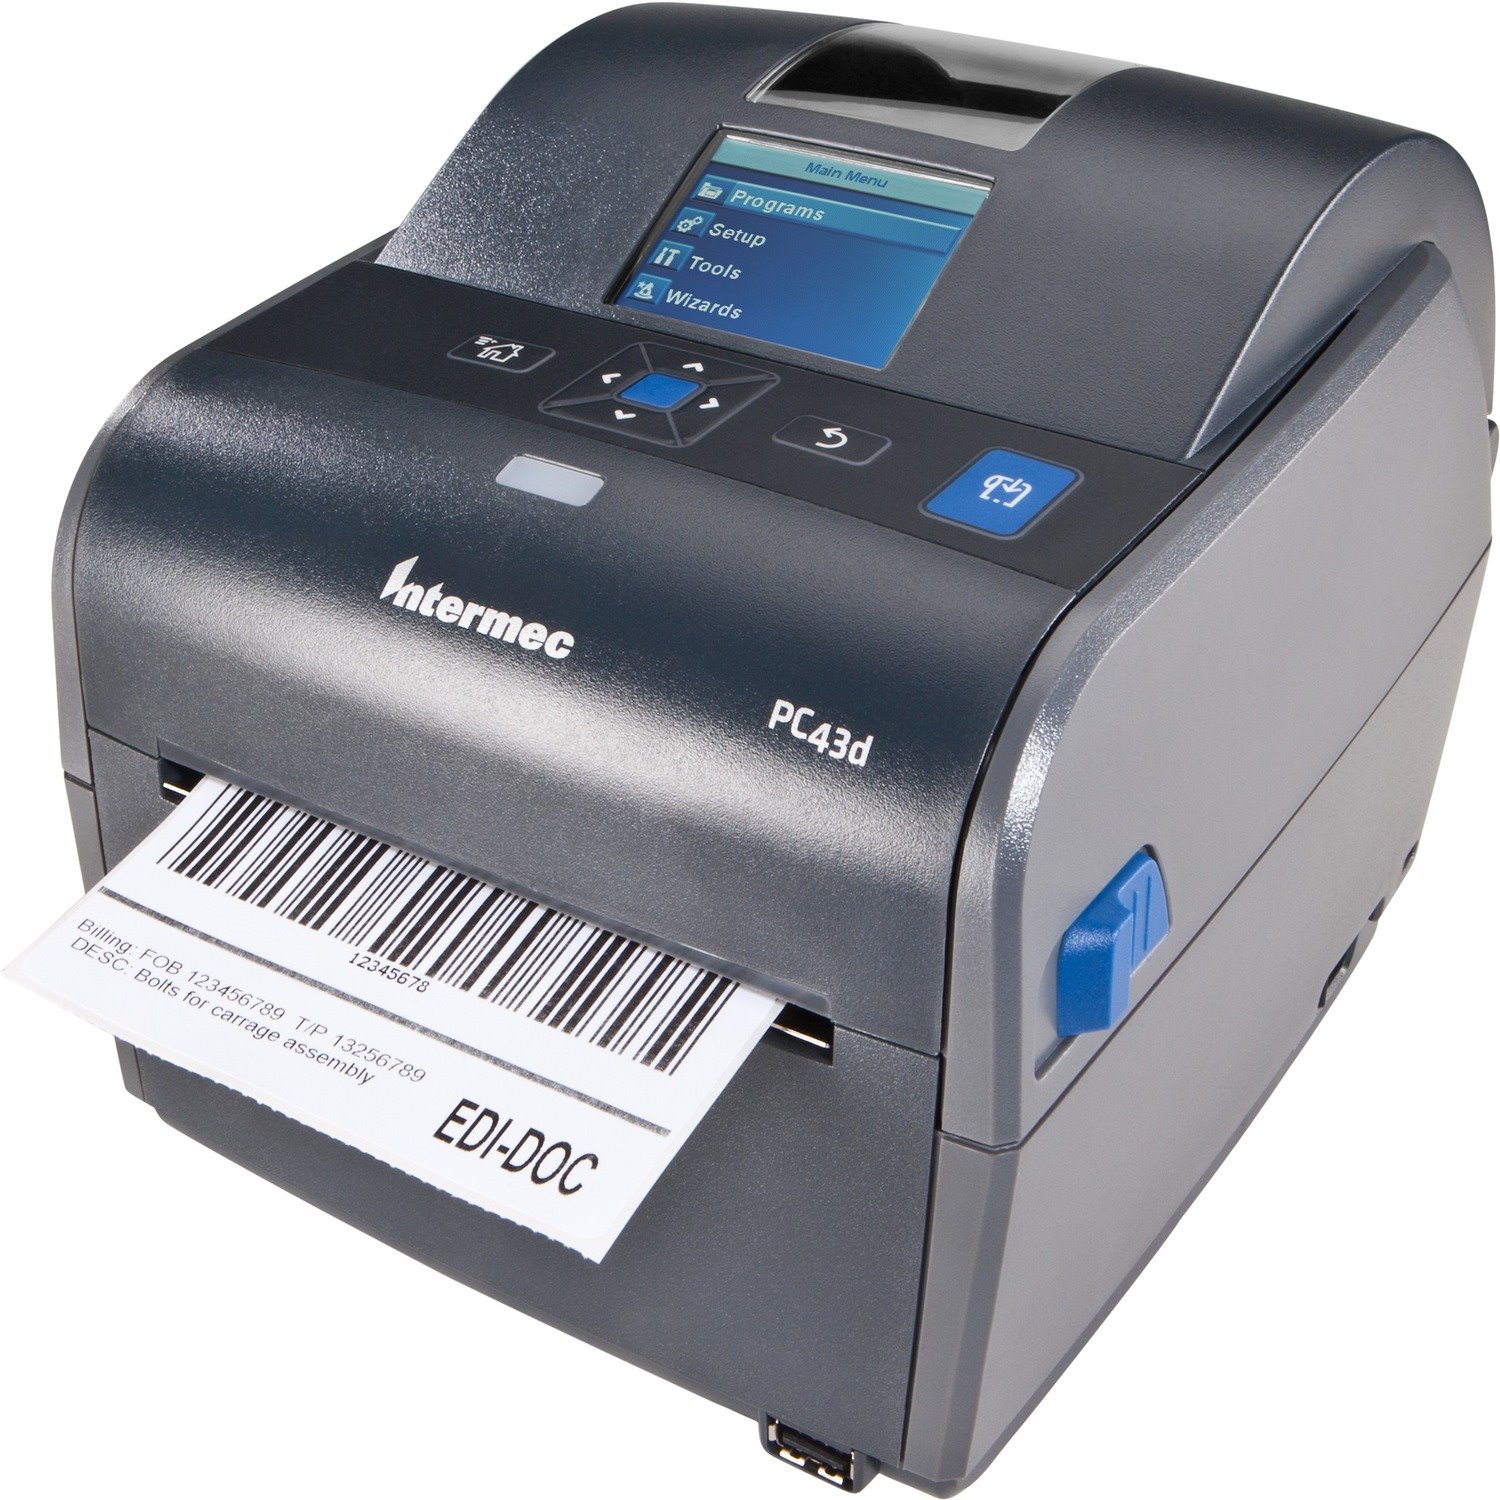 Intermec PC43d Desktop Direct Thermal Printer - Monochrome - RFID Label Print - USB